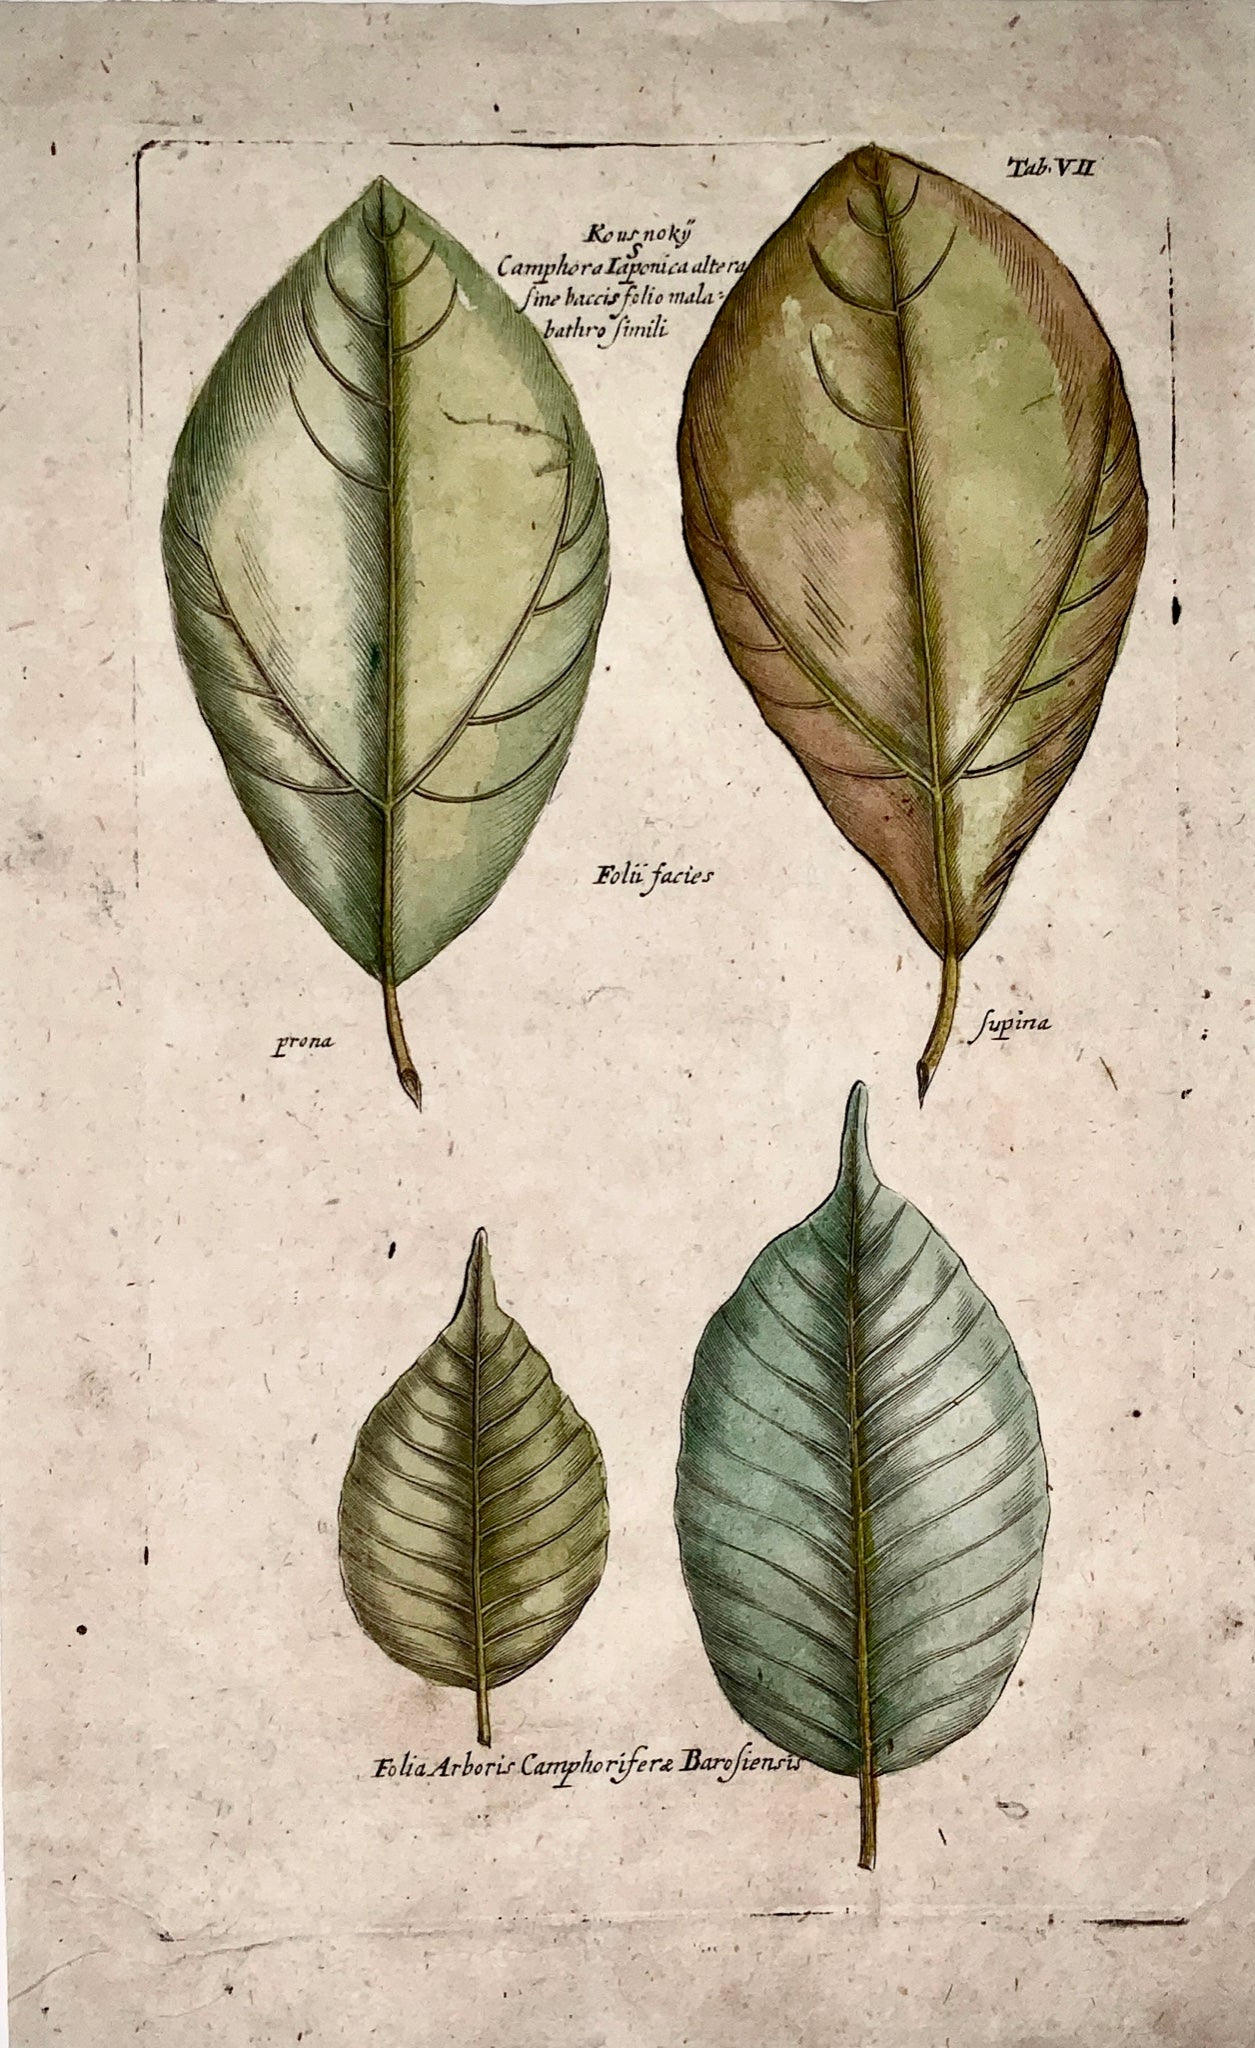 1704 CAMPHOR LAUREL Tree - M. Valentini (1657-1729) - folio copper engraving - Botany, dendrology